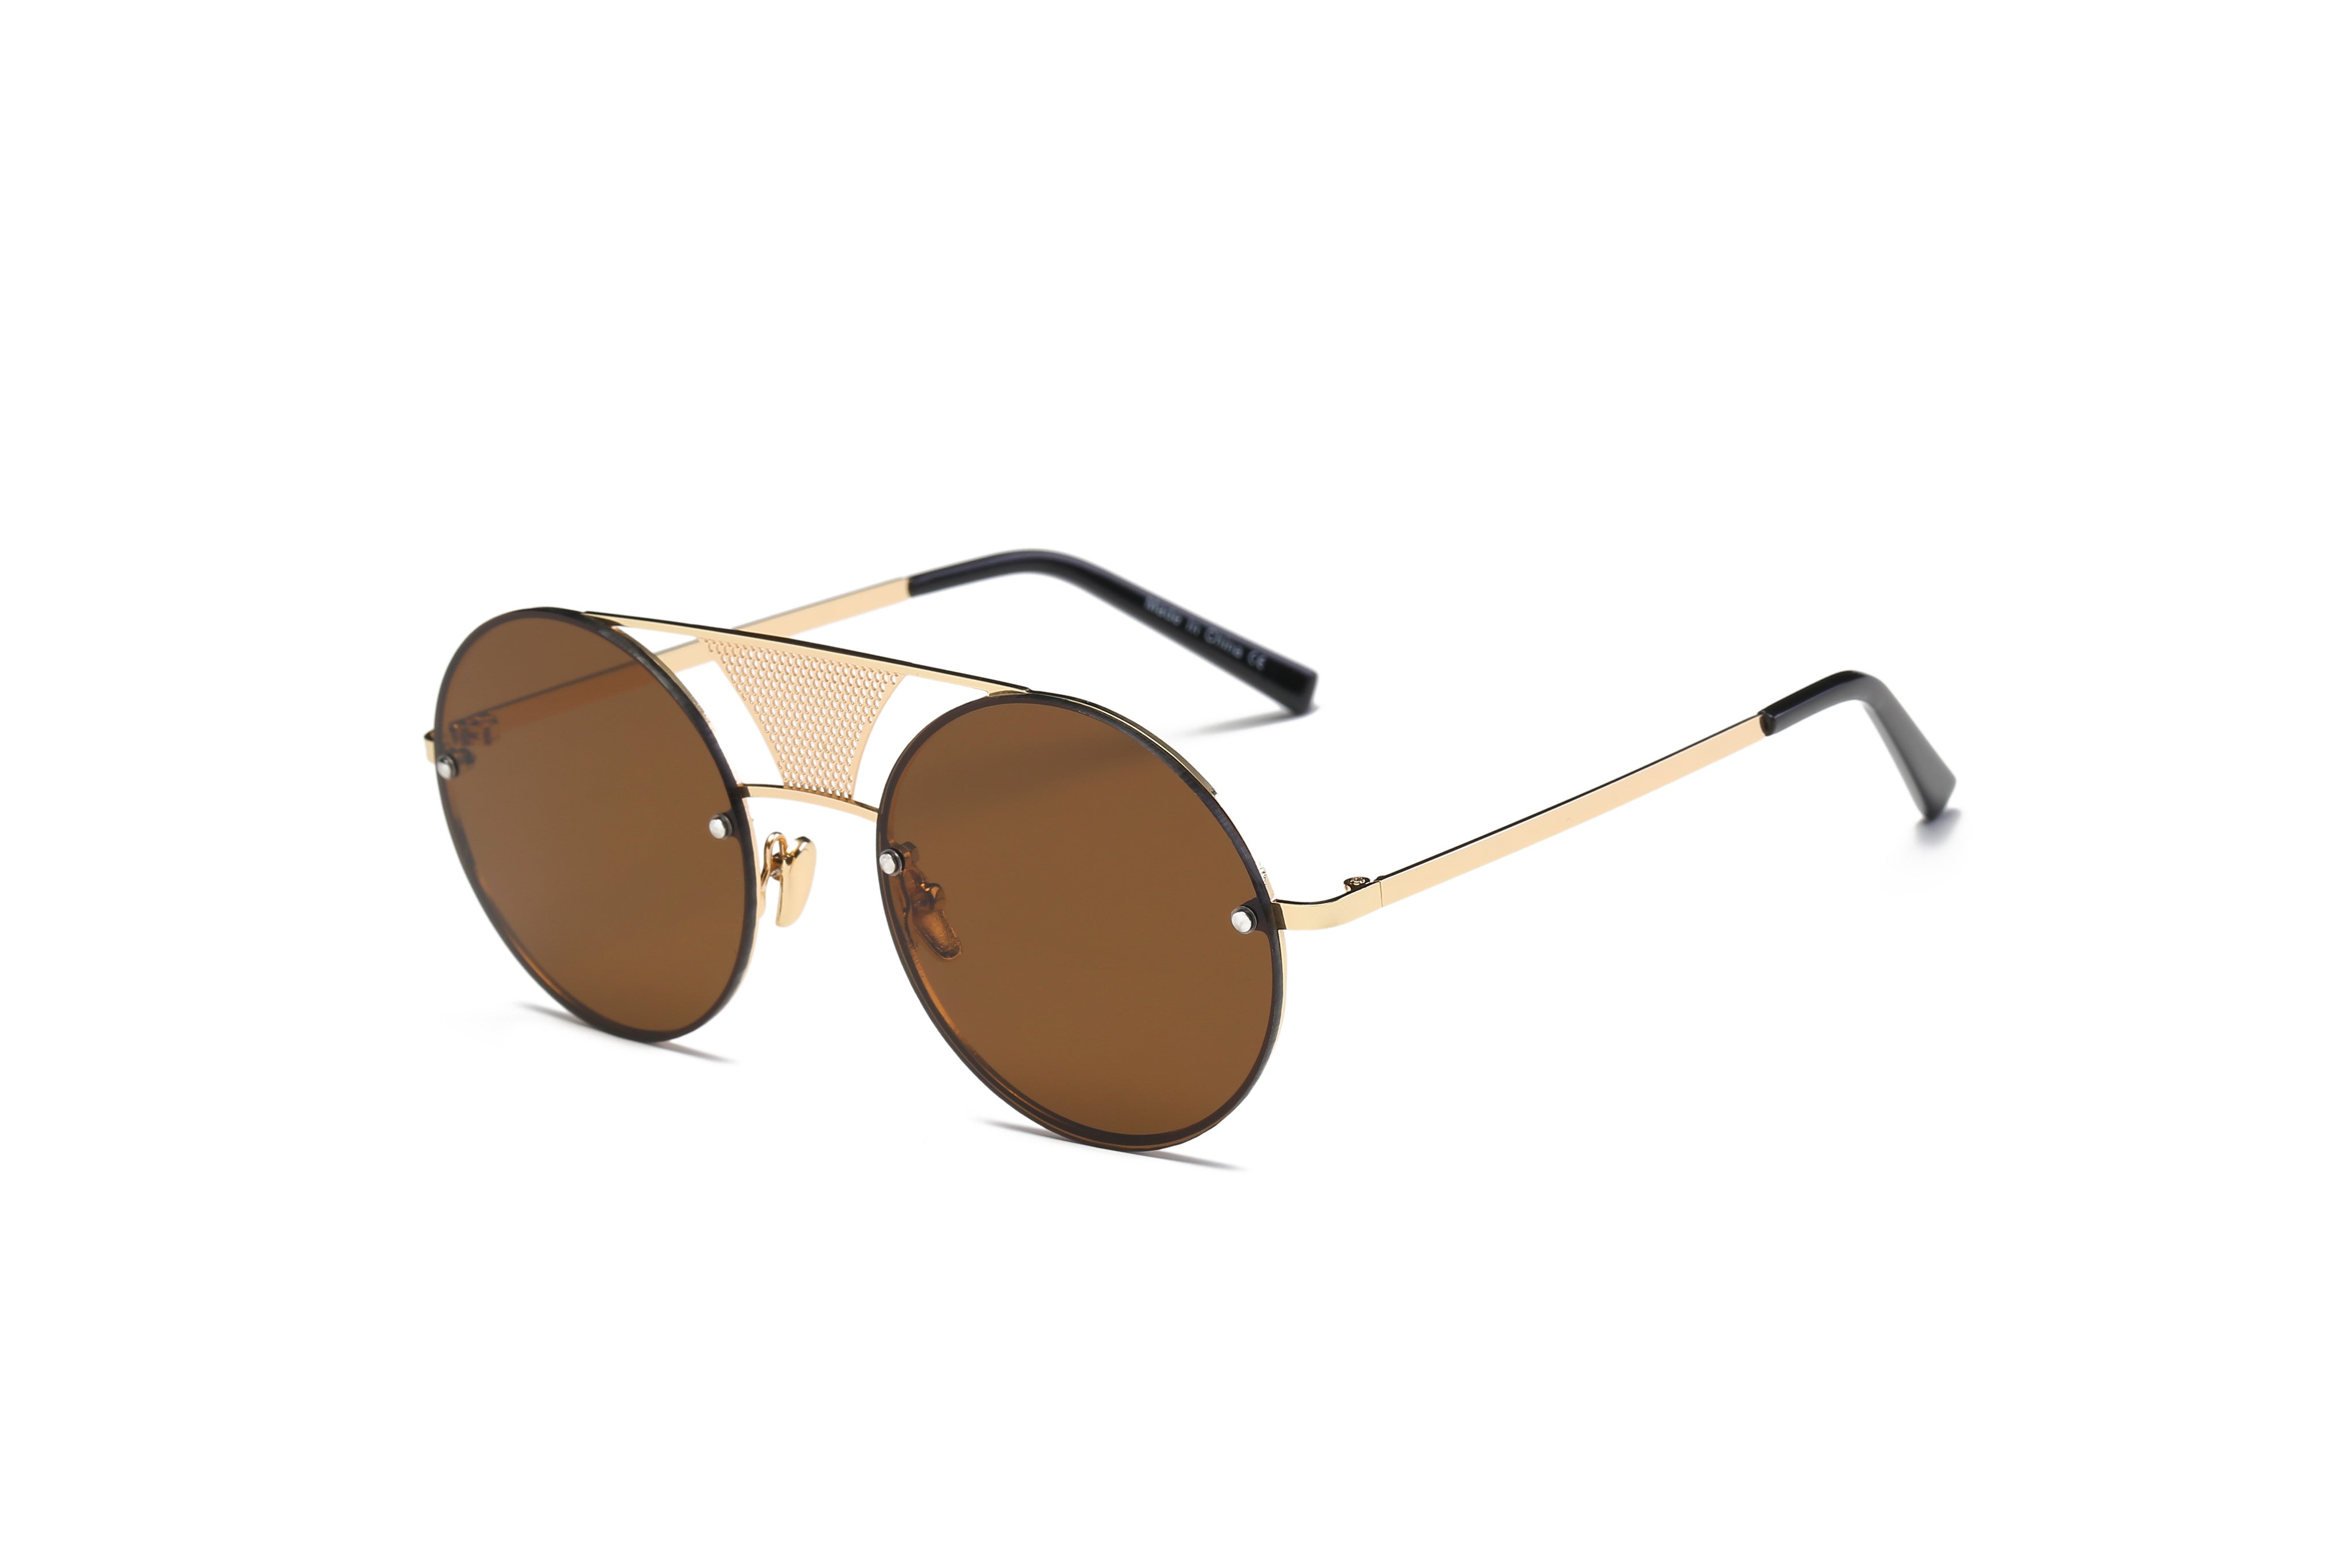 S2012 - Retro Round Brow-Bar Circle Fashion Wholesale Sunglasses Black Rims - GOLD Arms - Brown Lens